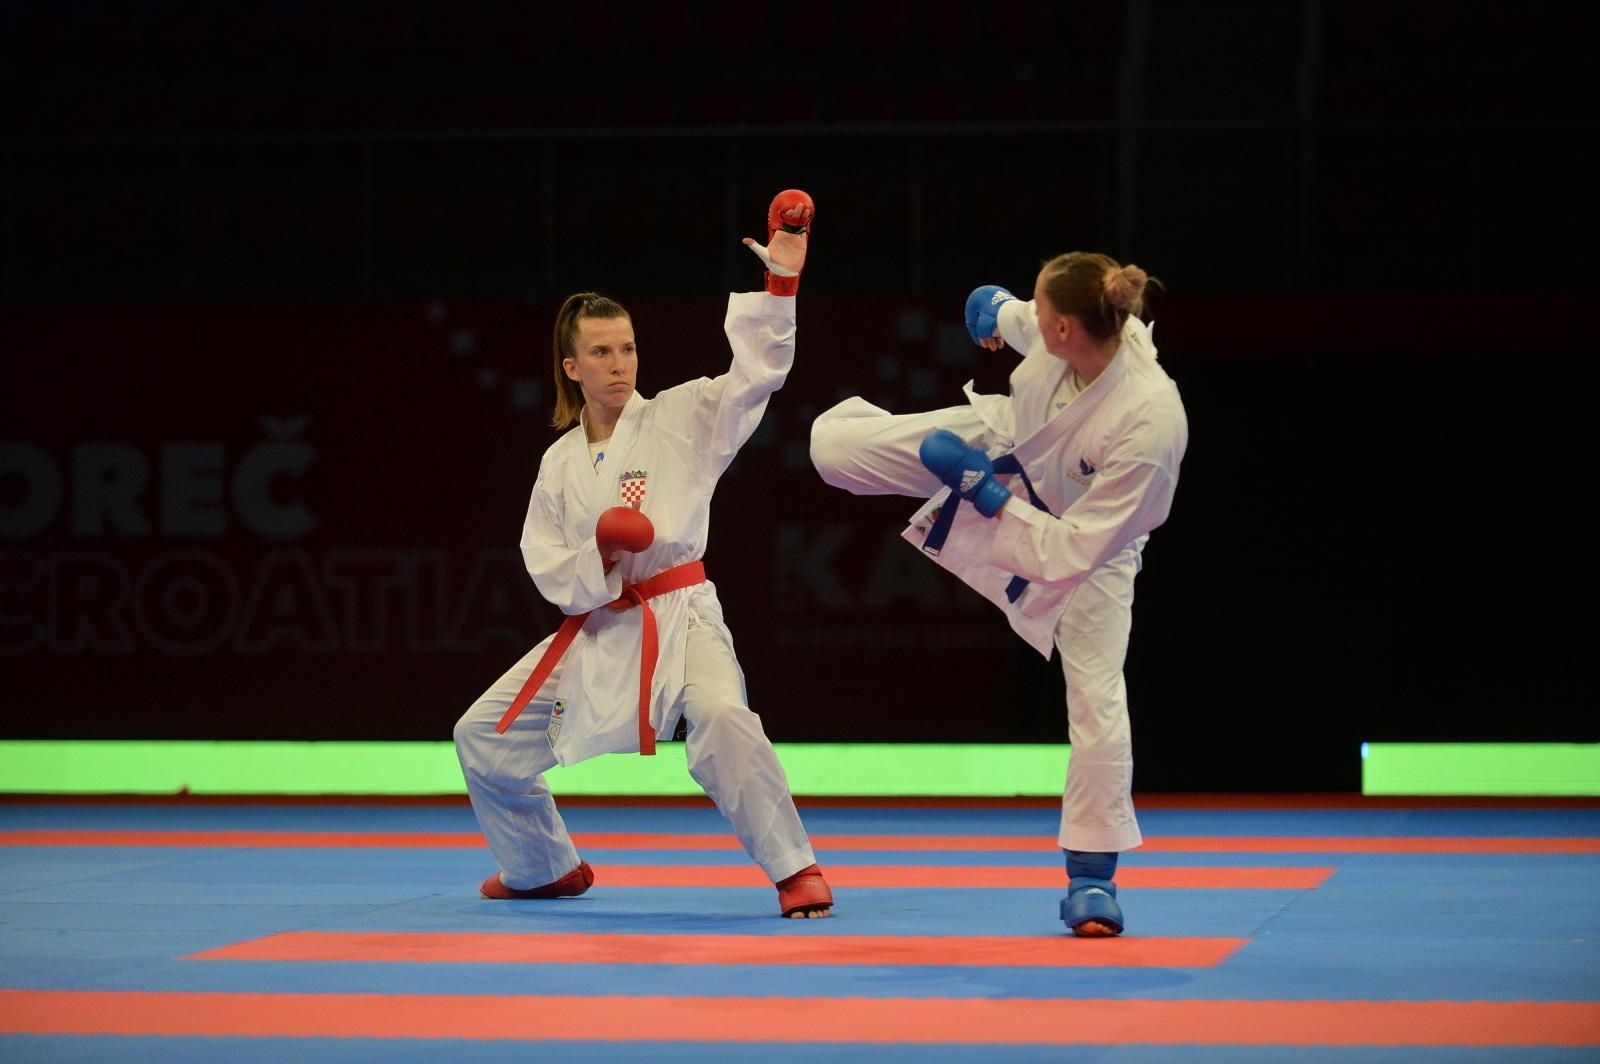 22.05.2021., Porec - Europsko prvenstvo u karateu - Female team kumite Hrvatska protiv Francuske, CROATIA (LENARD, LESJAK, VUKOJA, ZORKO) (CRO) vs FRANCE (AGIER, AVAZERI, HEURTAULT, SIVERT) (FRA). Ana Lenard (crvena) u borbi.
Photo: Sasa Miljevic / PIXSELL